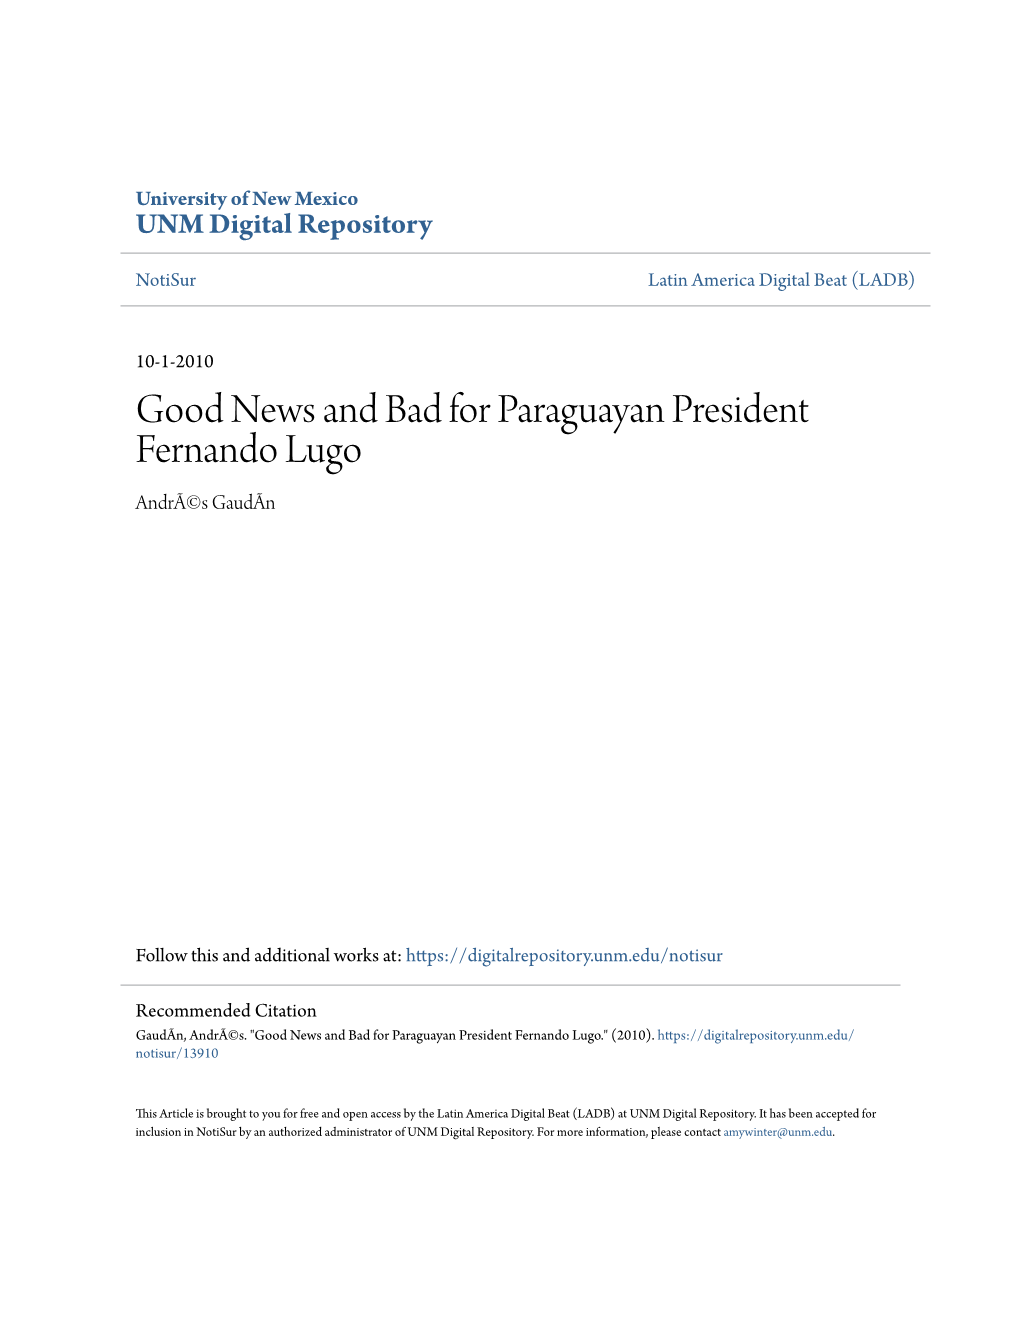 Good News and Bad for Paraguayan President Fernando Lugo Andrã©S Gaudãn